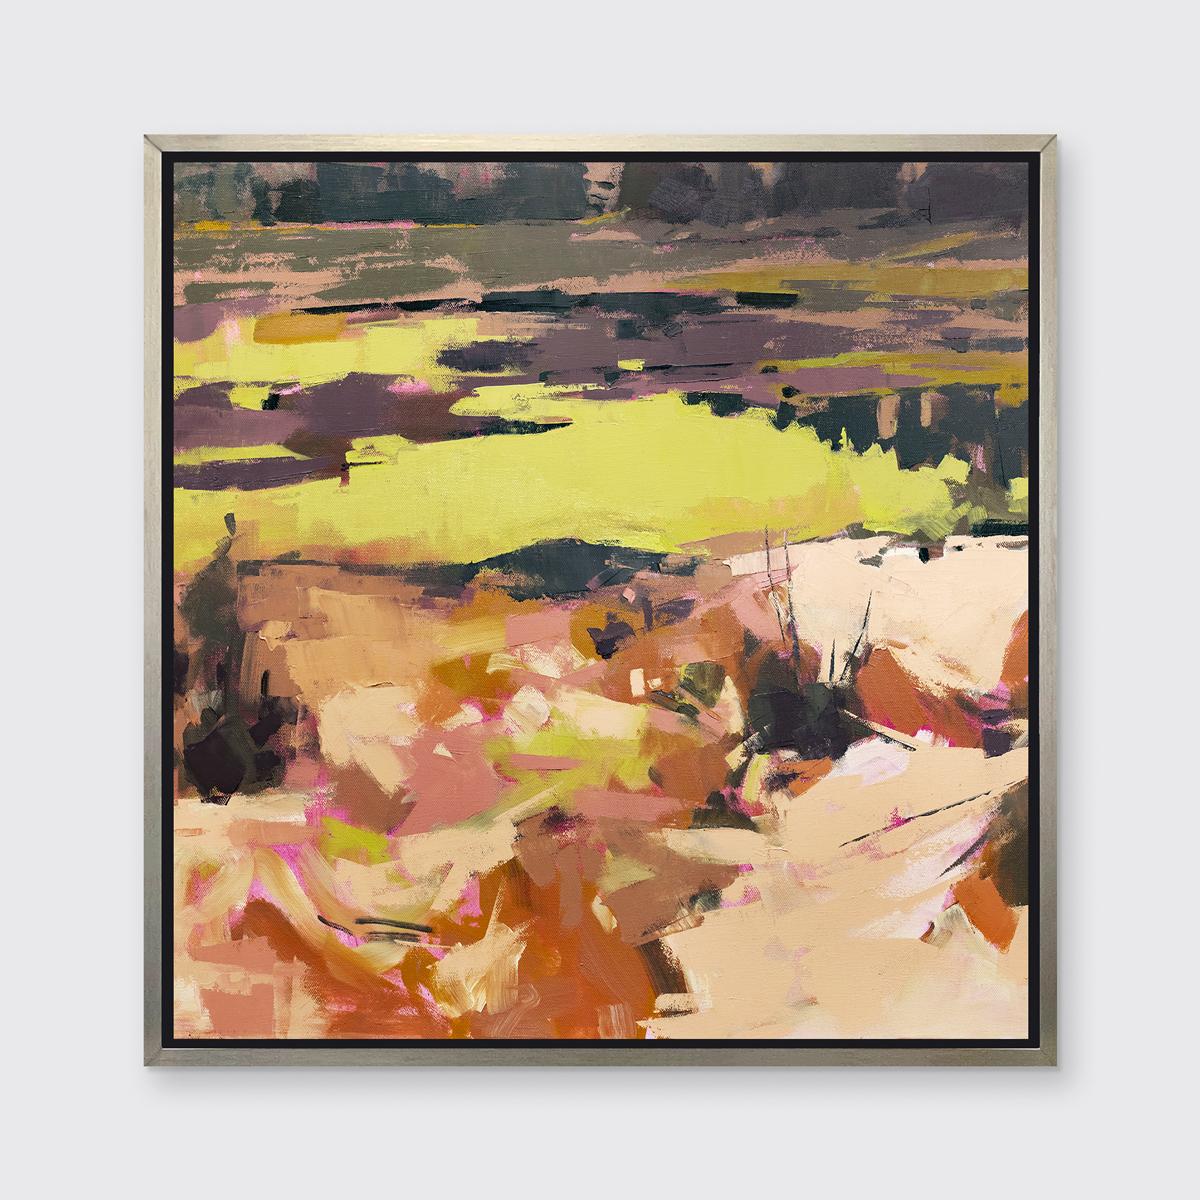 Bri Custer Landscape Print - "Radiate" Framed Limited Edition Print, 40" x 40"